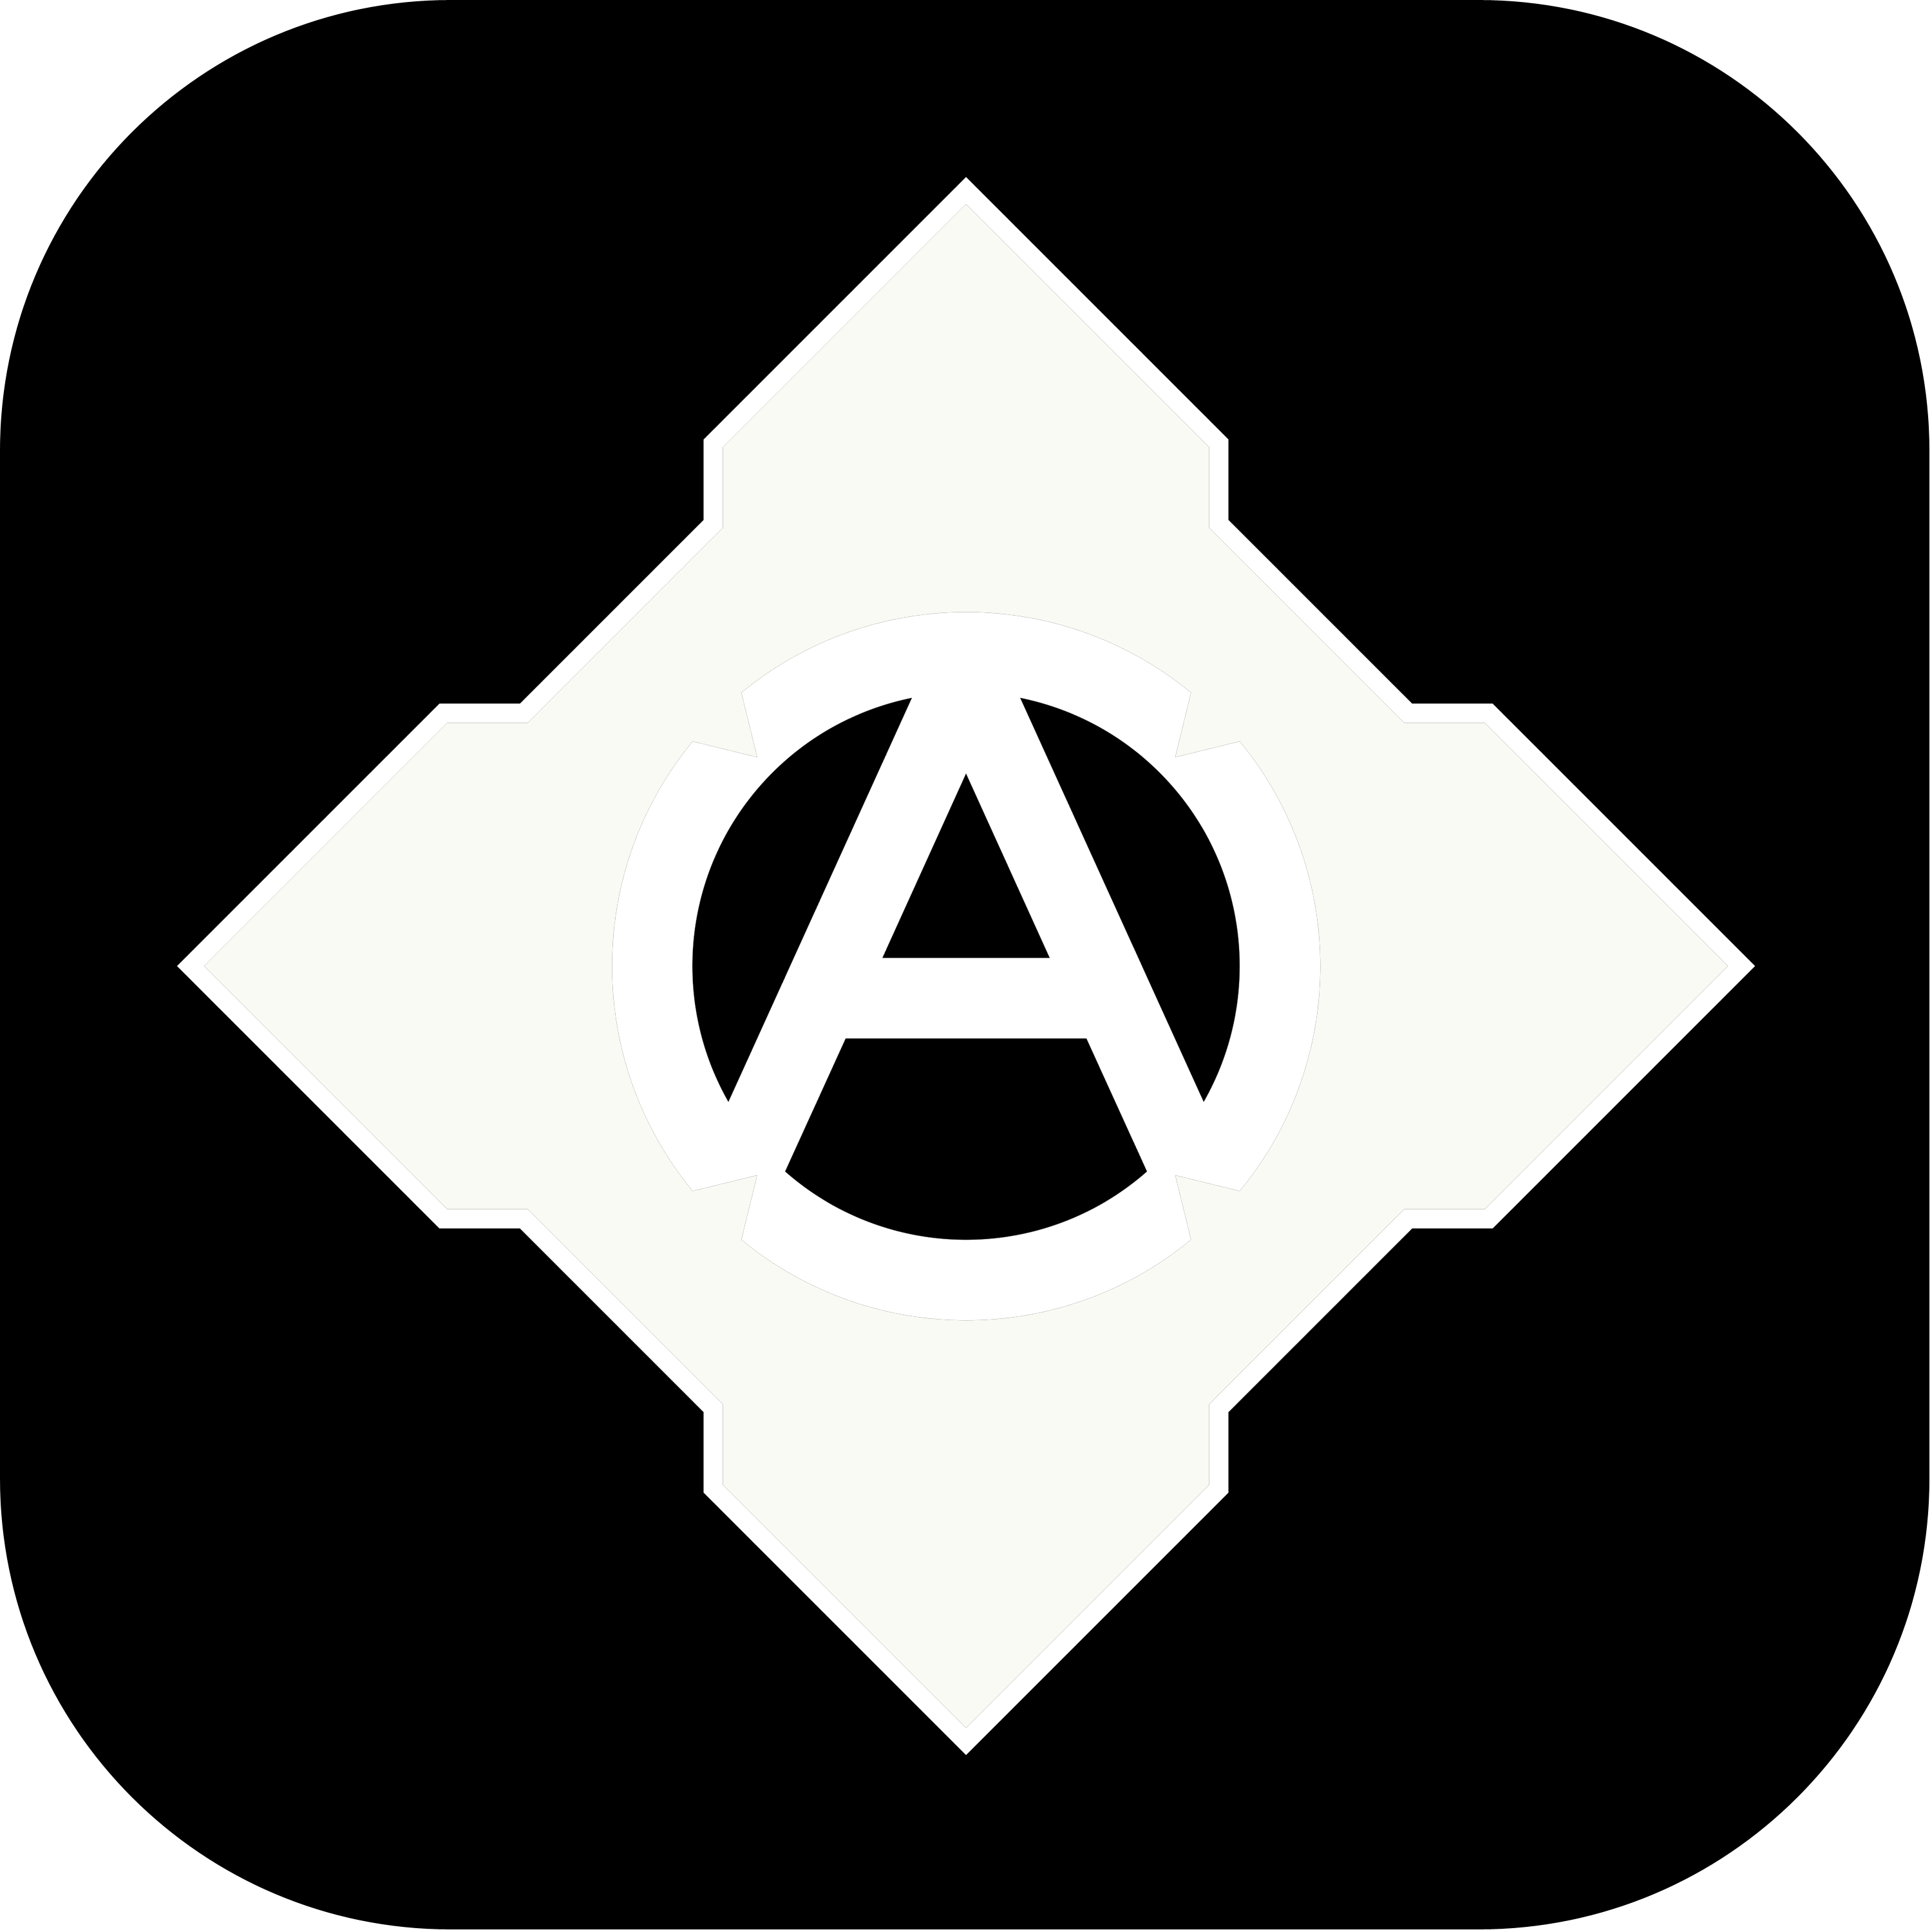 Revolutionary Action Emblem Logo Transparent Picture